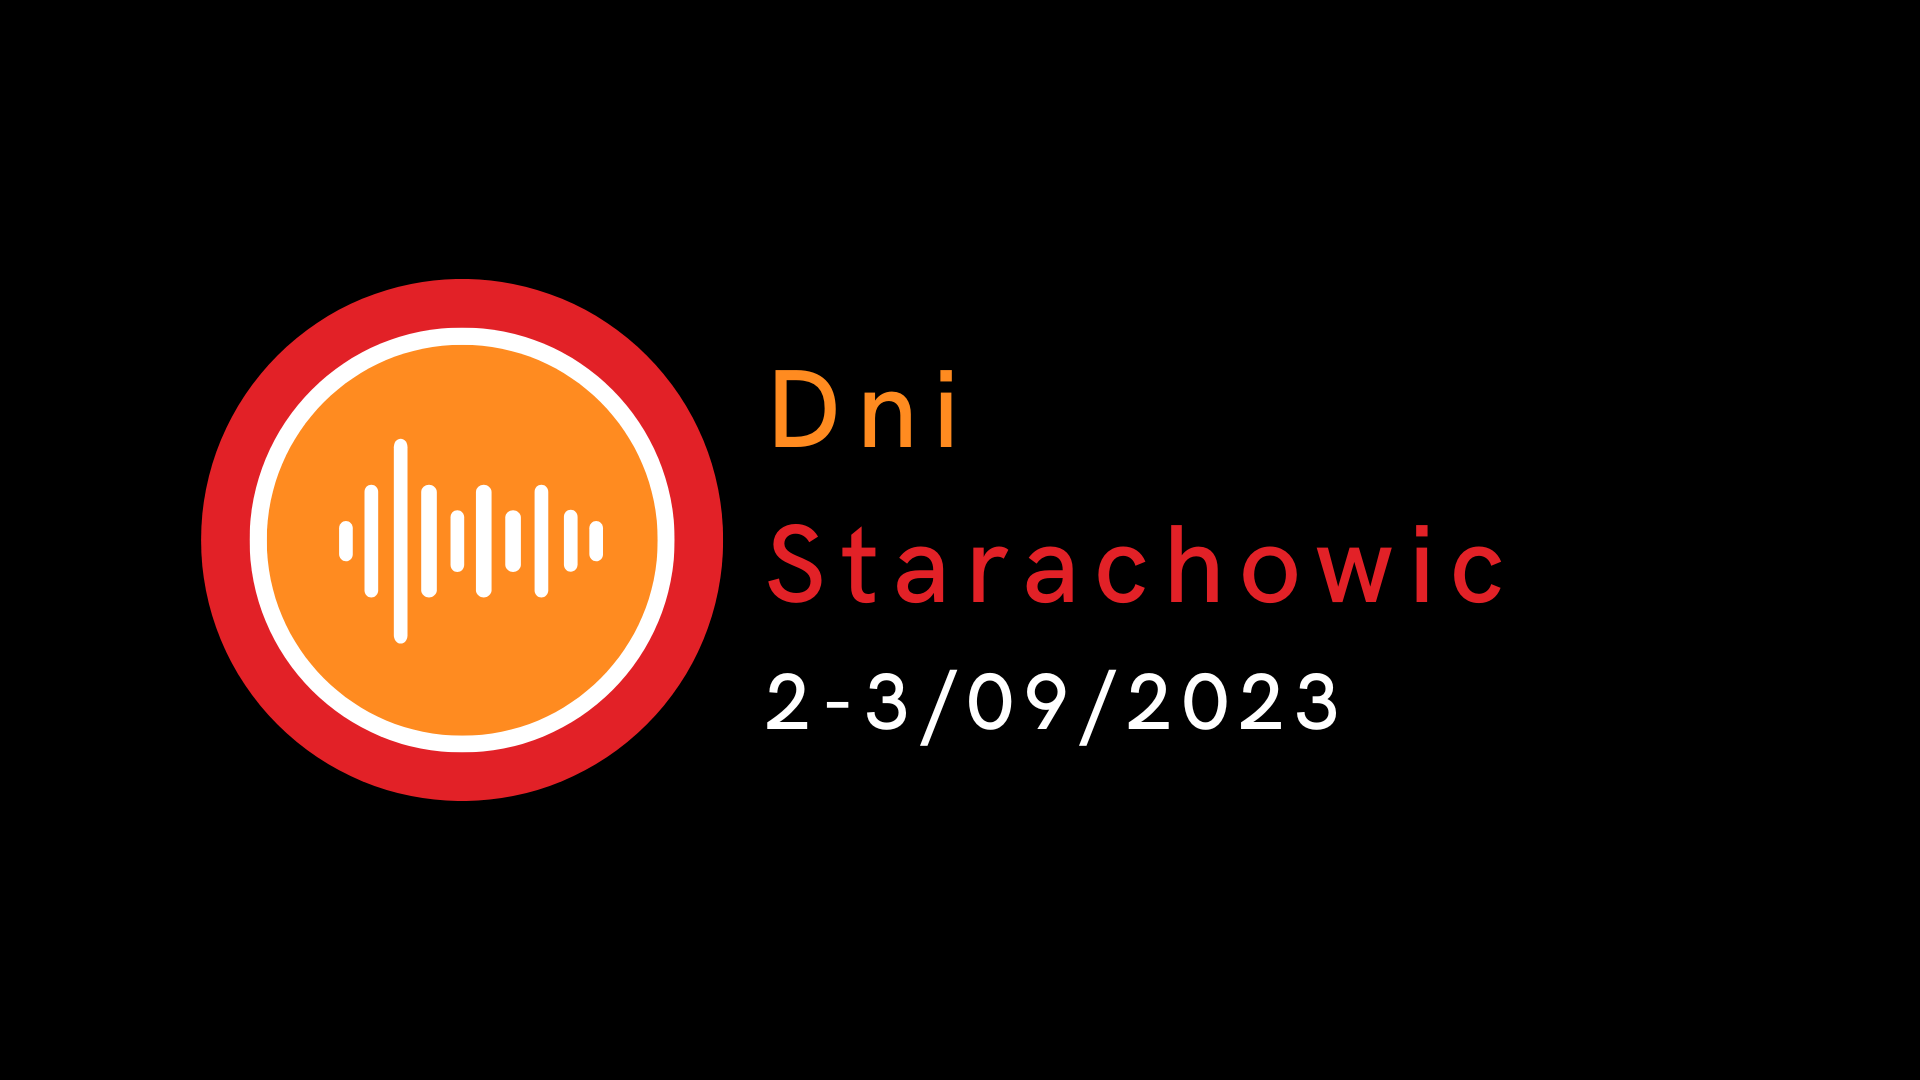 Dni Starachowic 2023